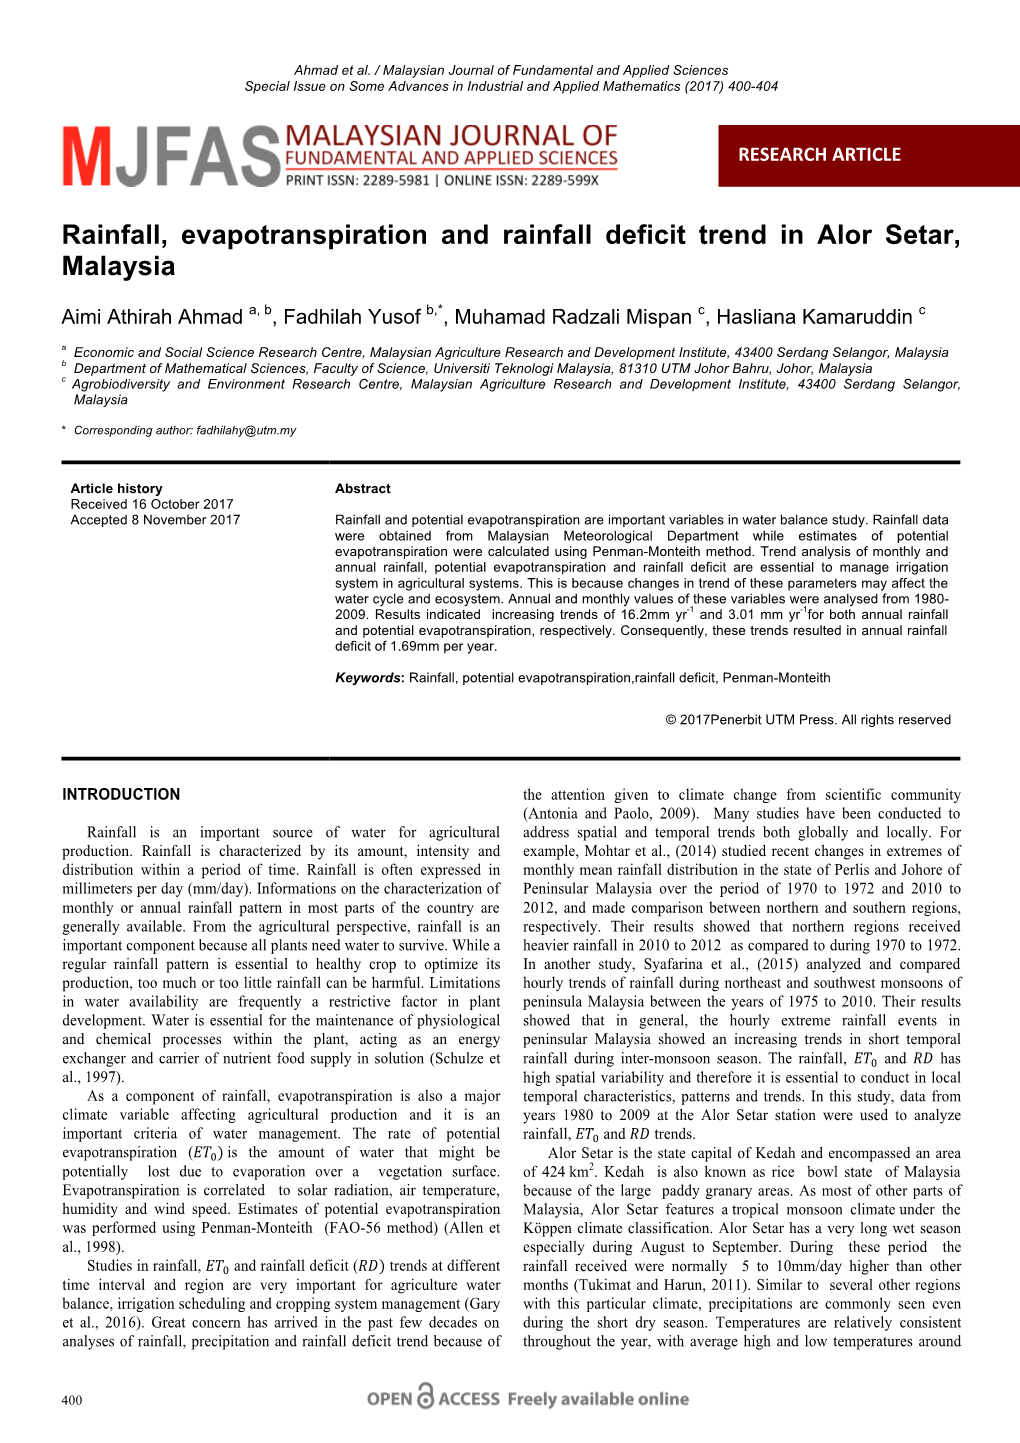 Rainfall, Evapotranspiration and Rainfall Deficit Trend in Alor Setar, Malaysia